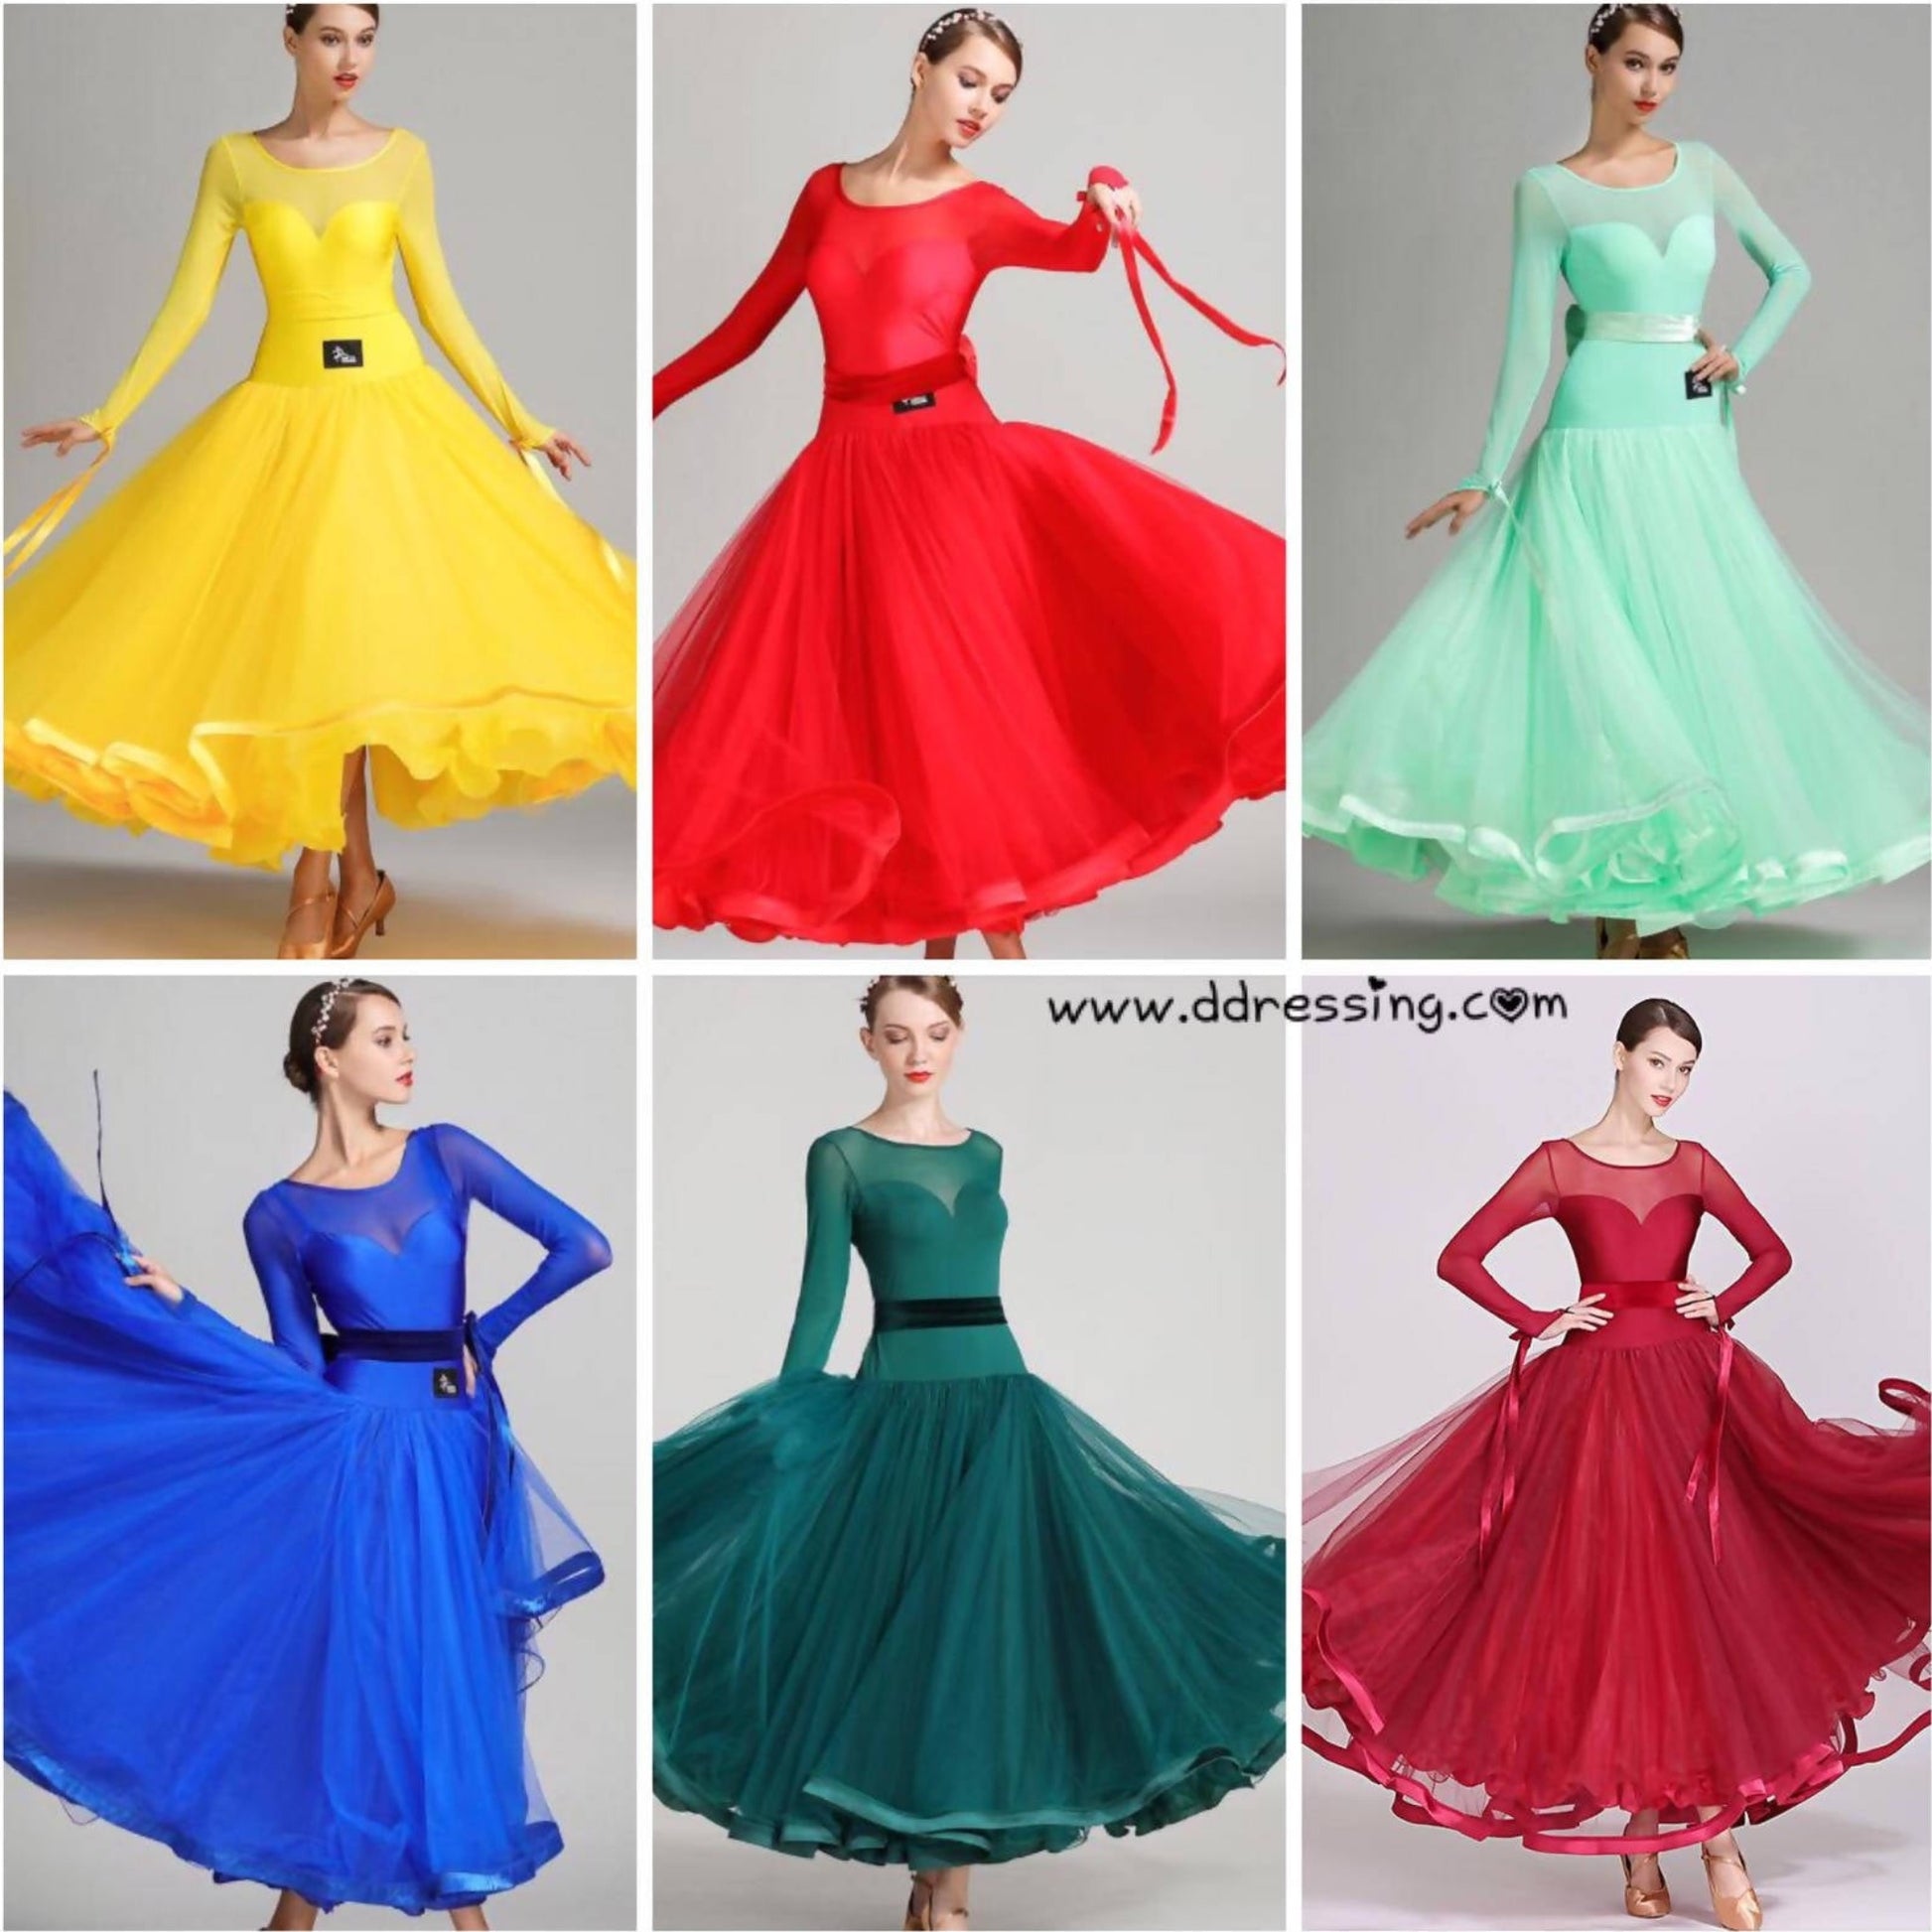 Red/Wine Red/Yellow/Dark Green/Black/Light Green/Royal Blue Standard Ballroom Dancewear Dress